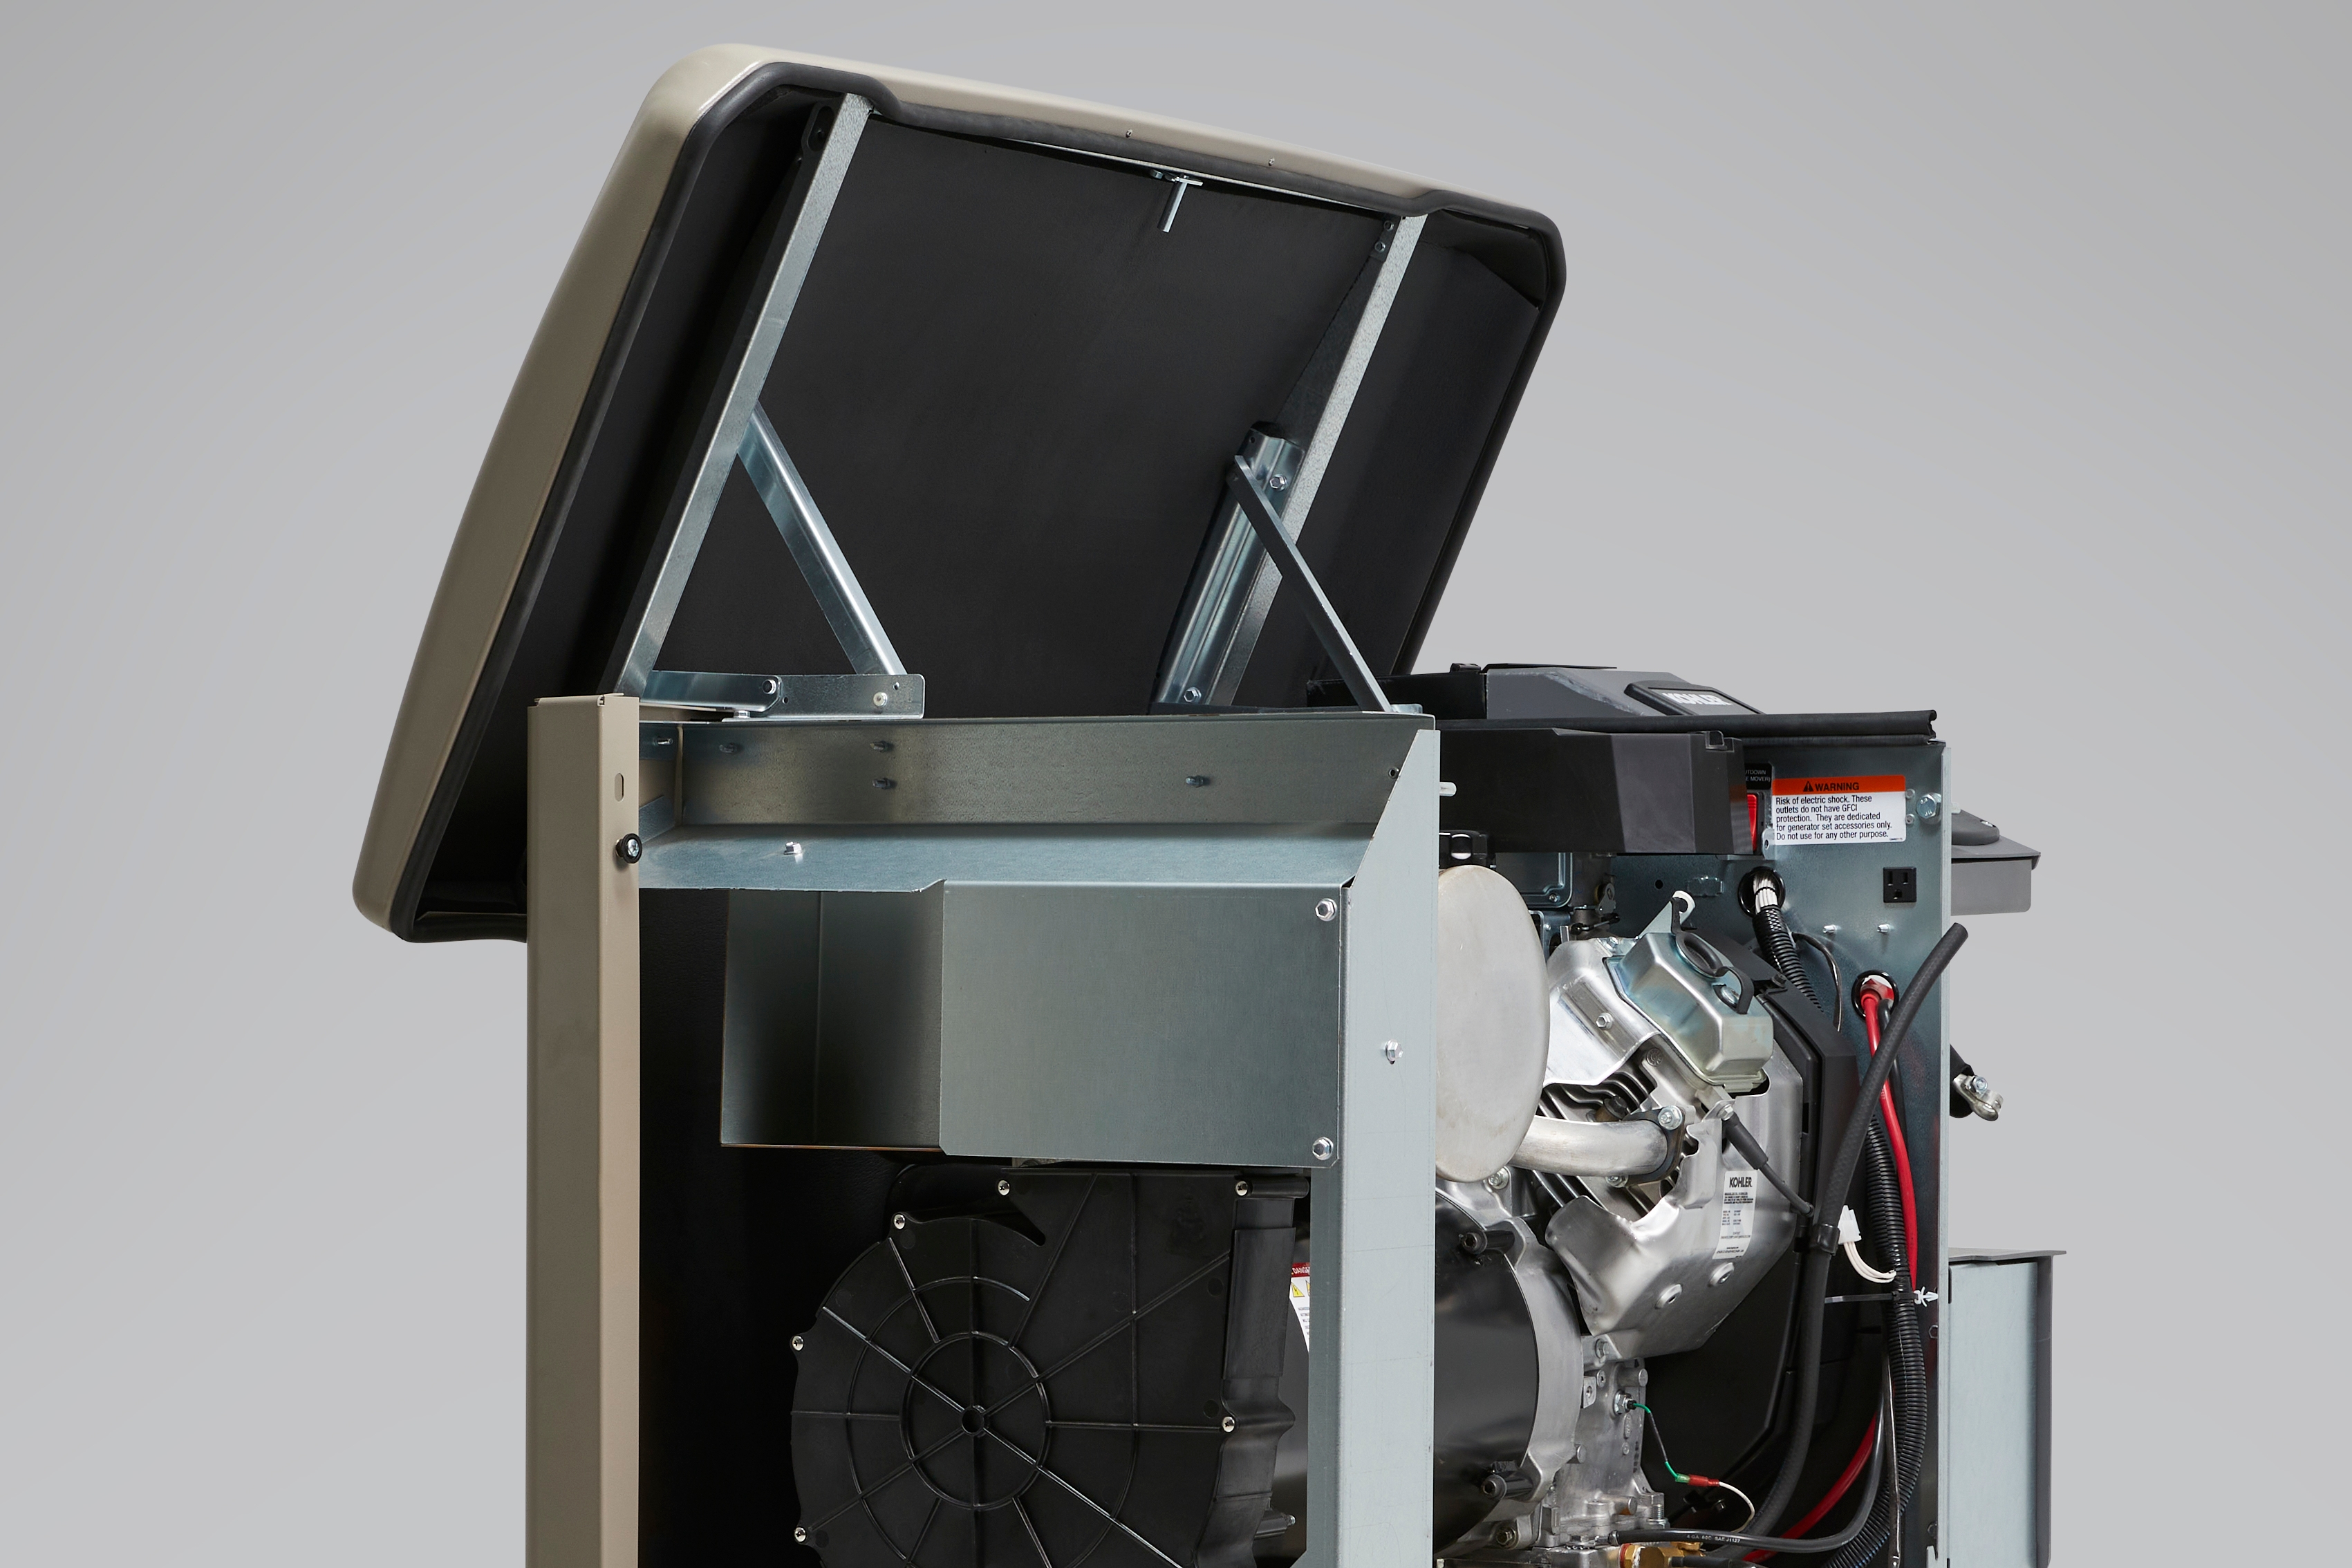 HE - KOHLER generator with the lid open showing a KOHLER engine installed inside (side view)
DAM #aae74764_rgb